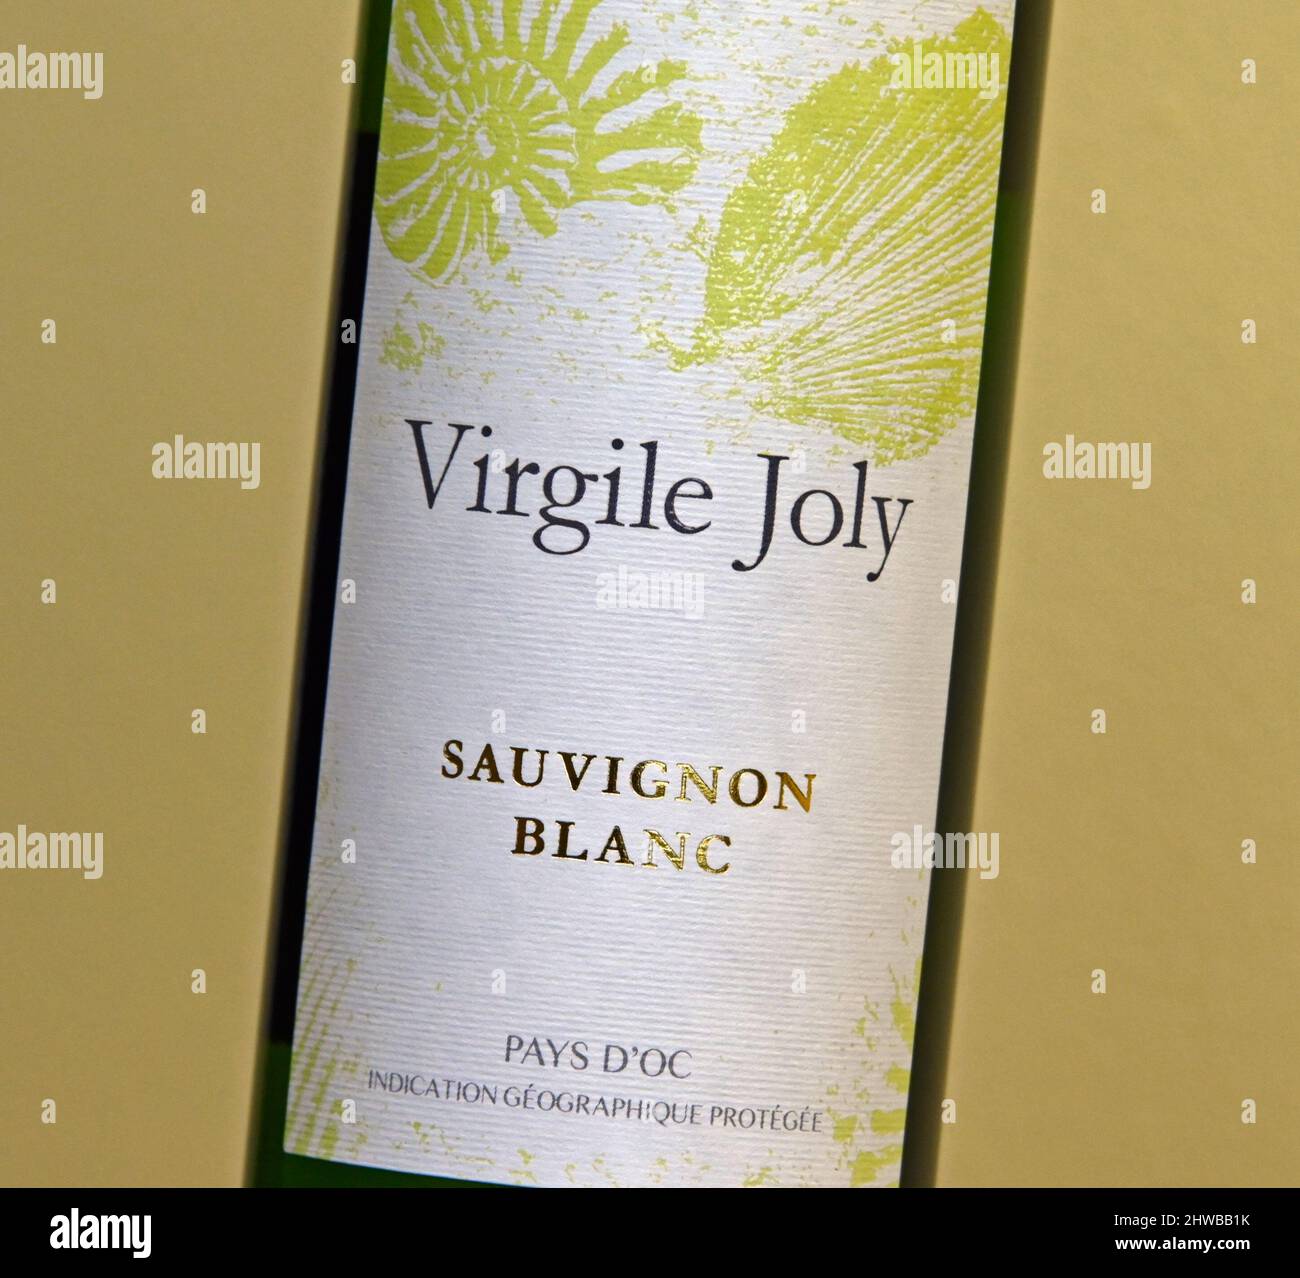 Wine label. Virgile Joly. Sauvignon Blanc. Pays D'Oc. Indication geographique protege. Stock Photo